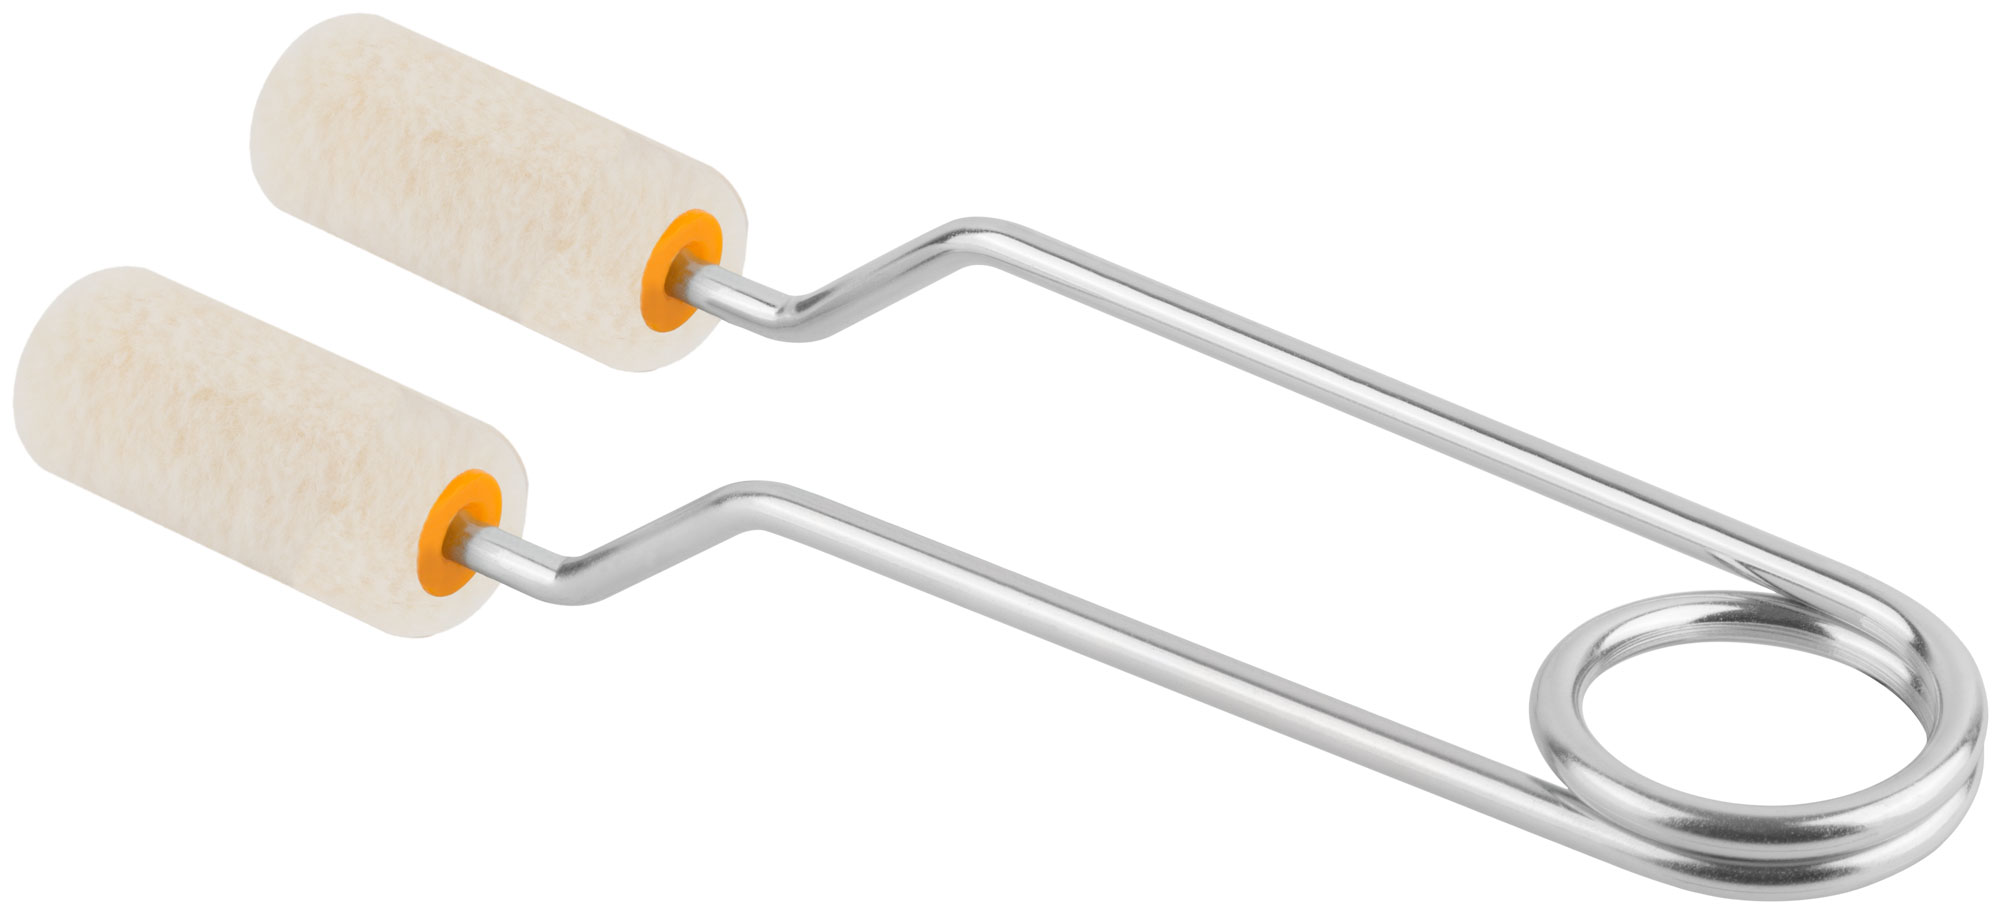 Ролик специальный для решеток, арматур, оград, ядро 15 мм,  100% велюр, ворс 5 мм, ручка д специальный ролик для решеток арматур оград master color